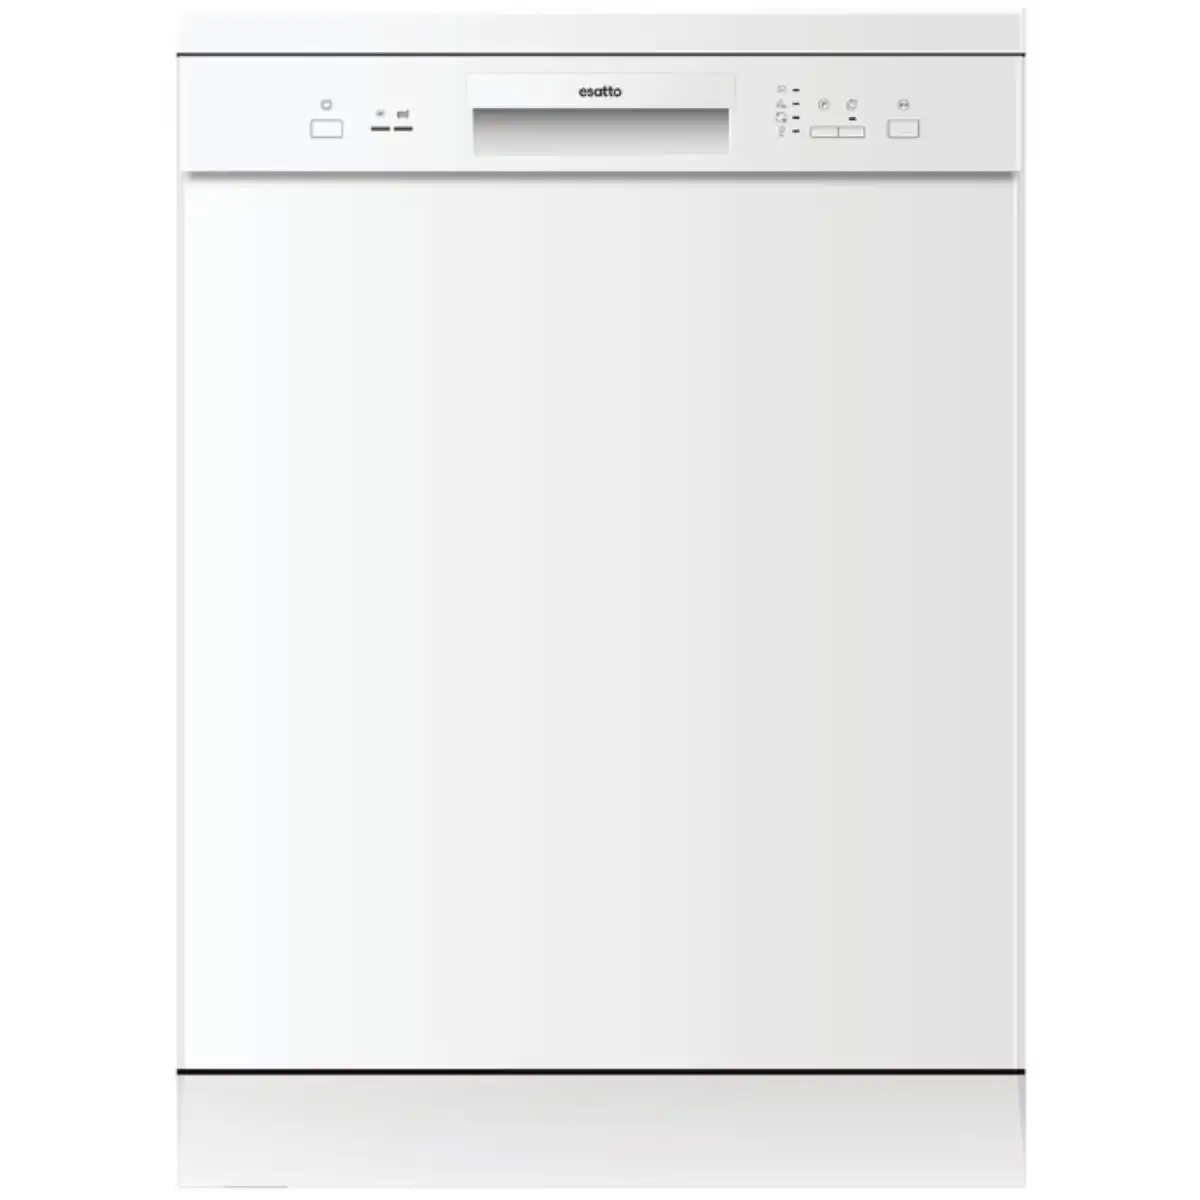 Esatto 60cm Freestanding White Finish Dishwasher